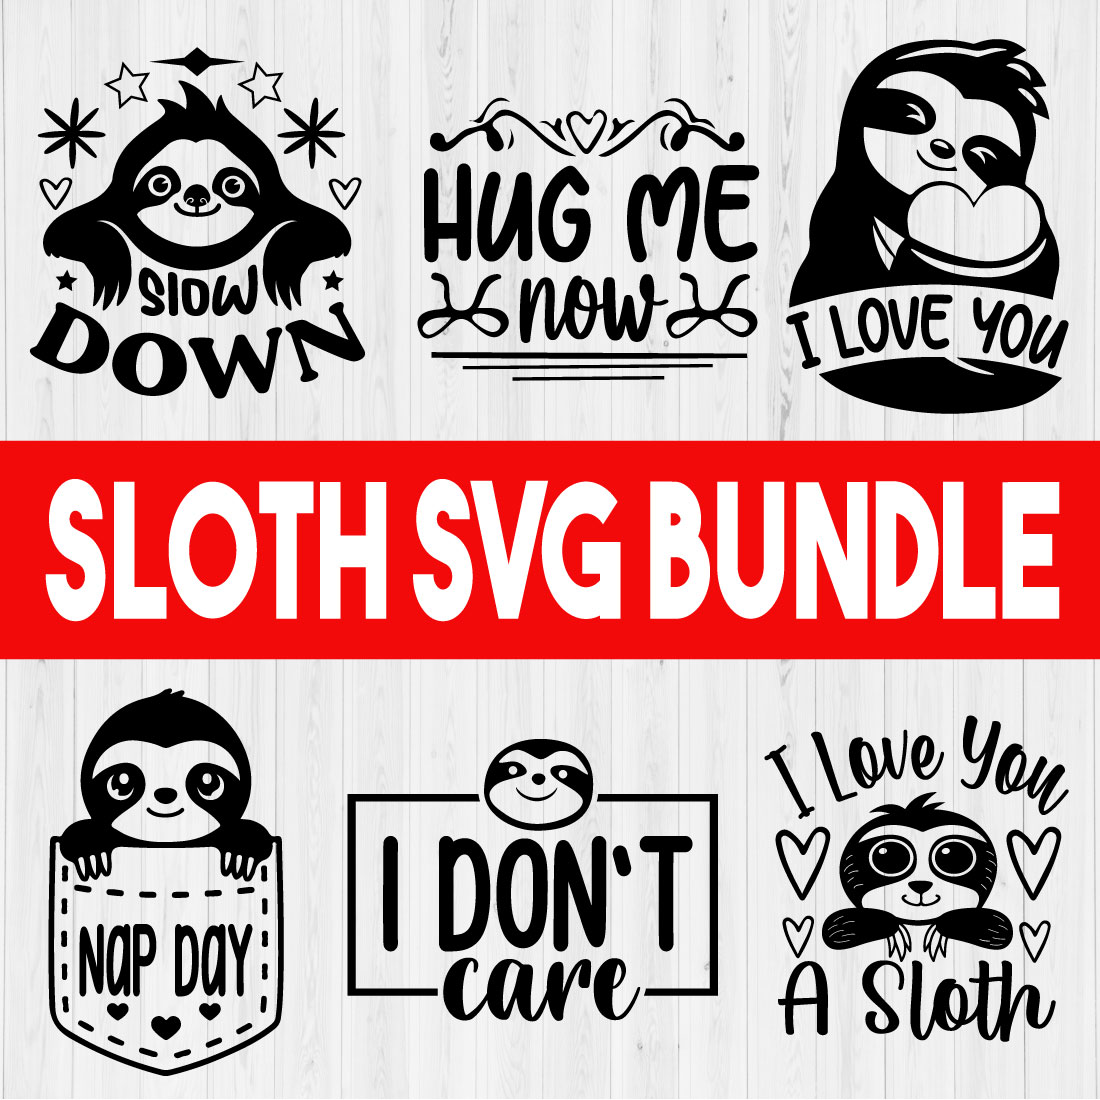 Sloth Svg Quote Bundle Vol3 cover image.